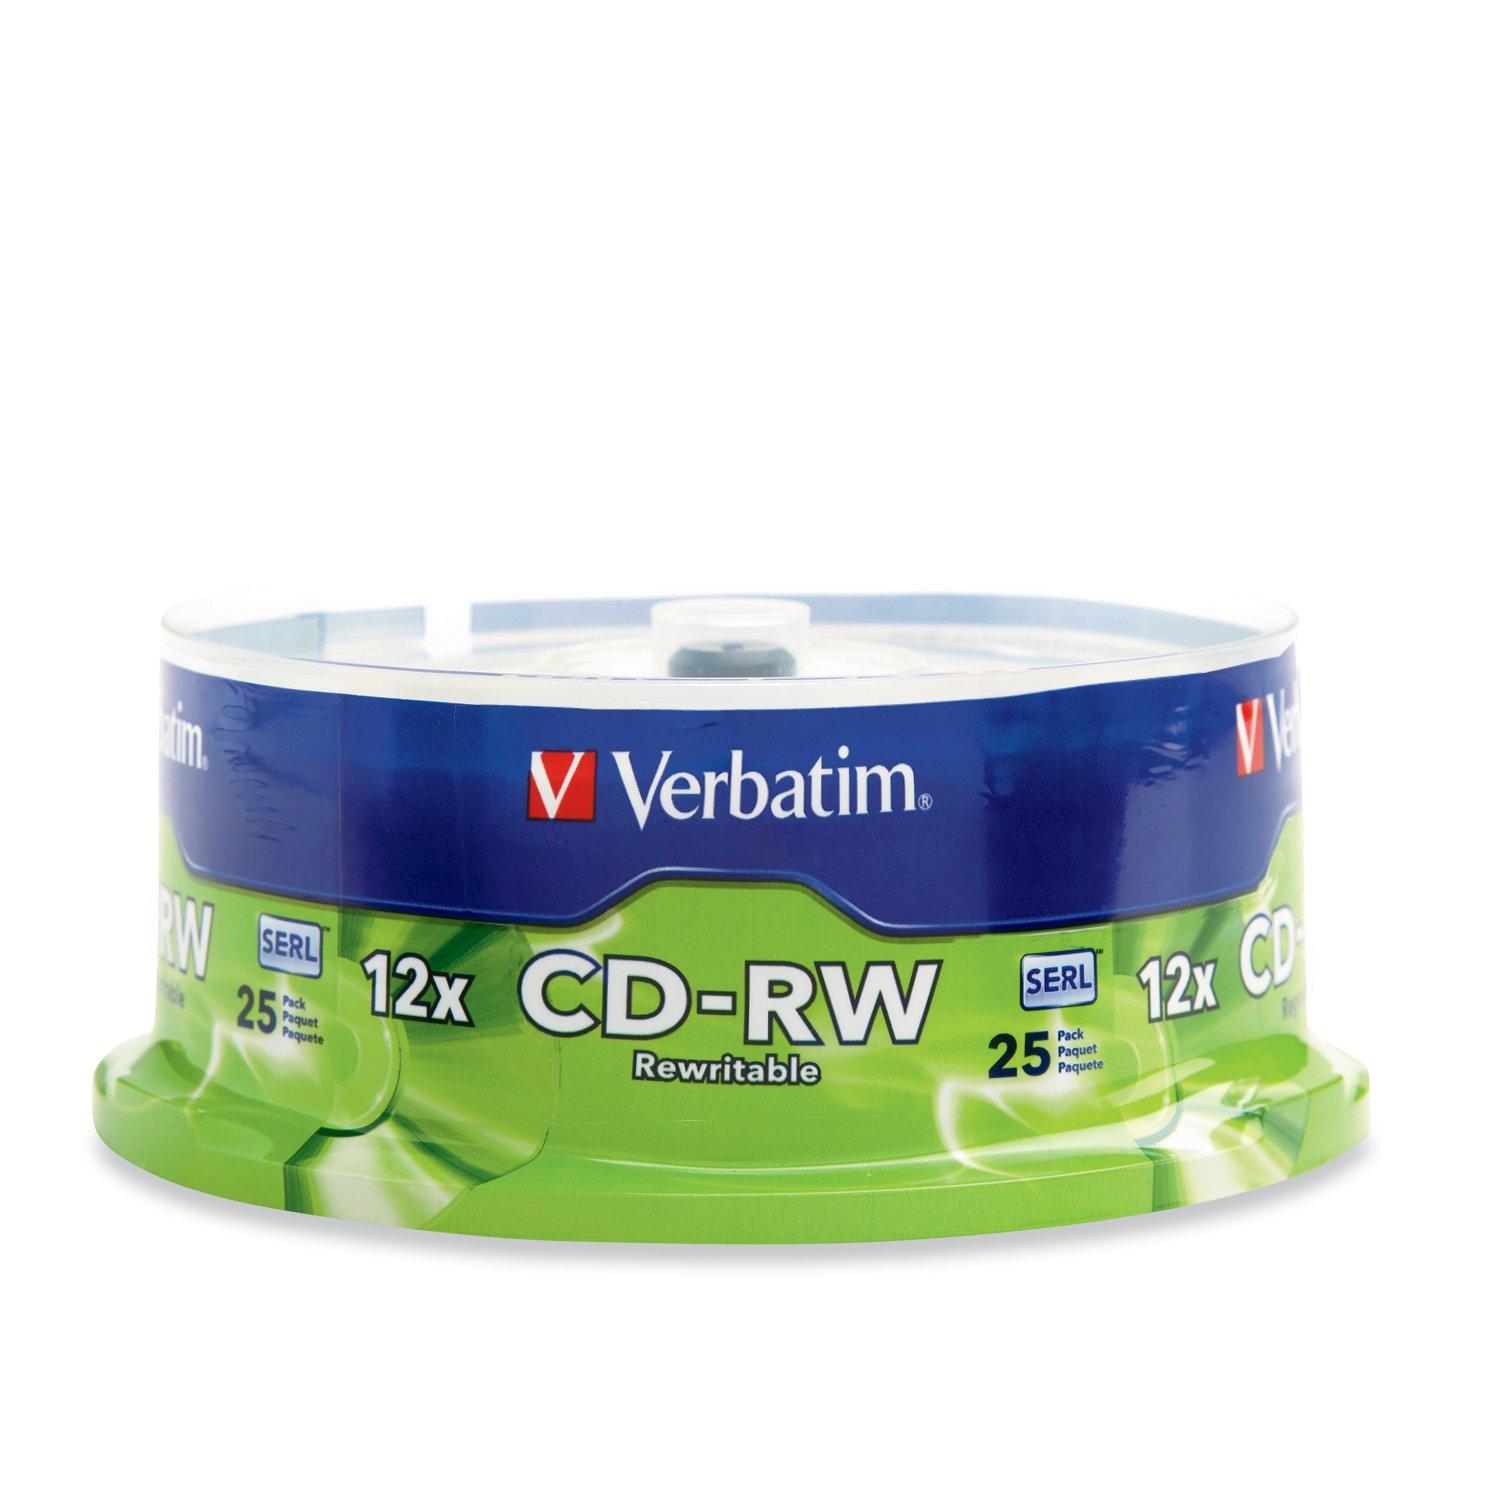 DISCO COMPACTO VERBATIM CD-RW 12X 80MIN 700MB TORRE 25PIEZAS VB95155 - VERBATIM